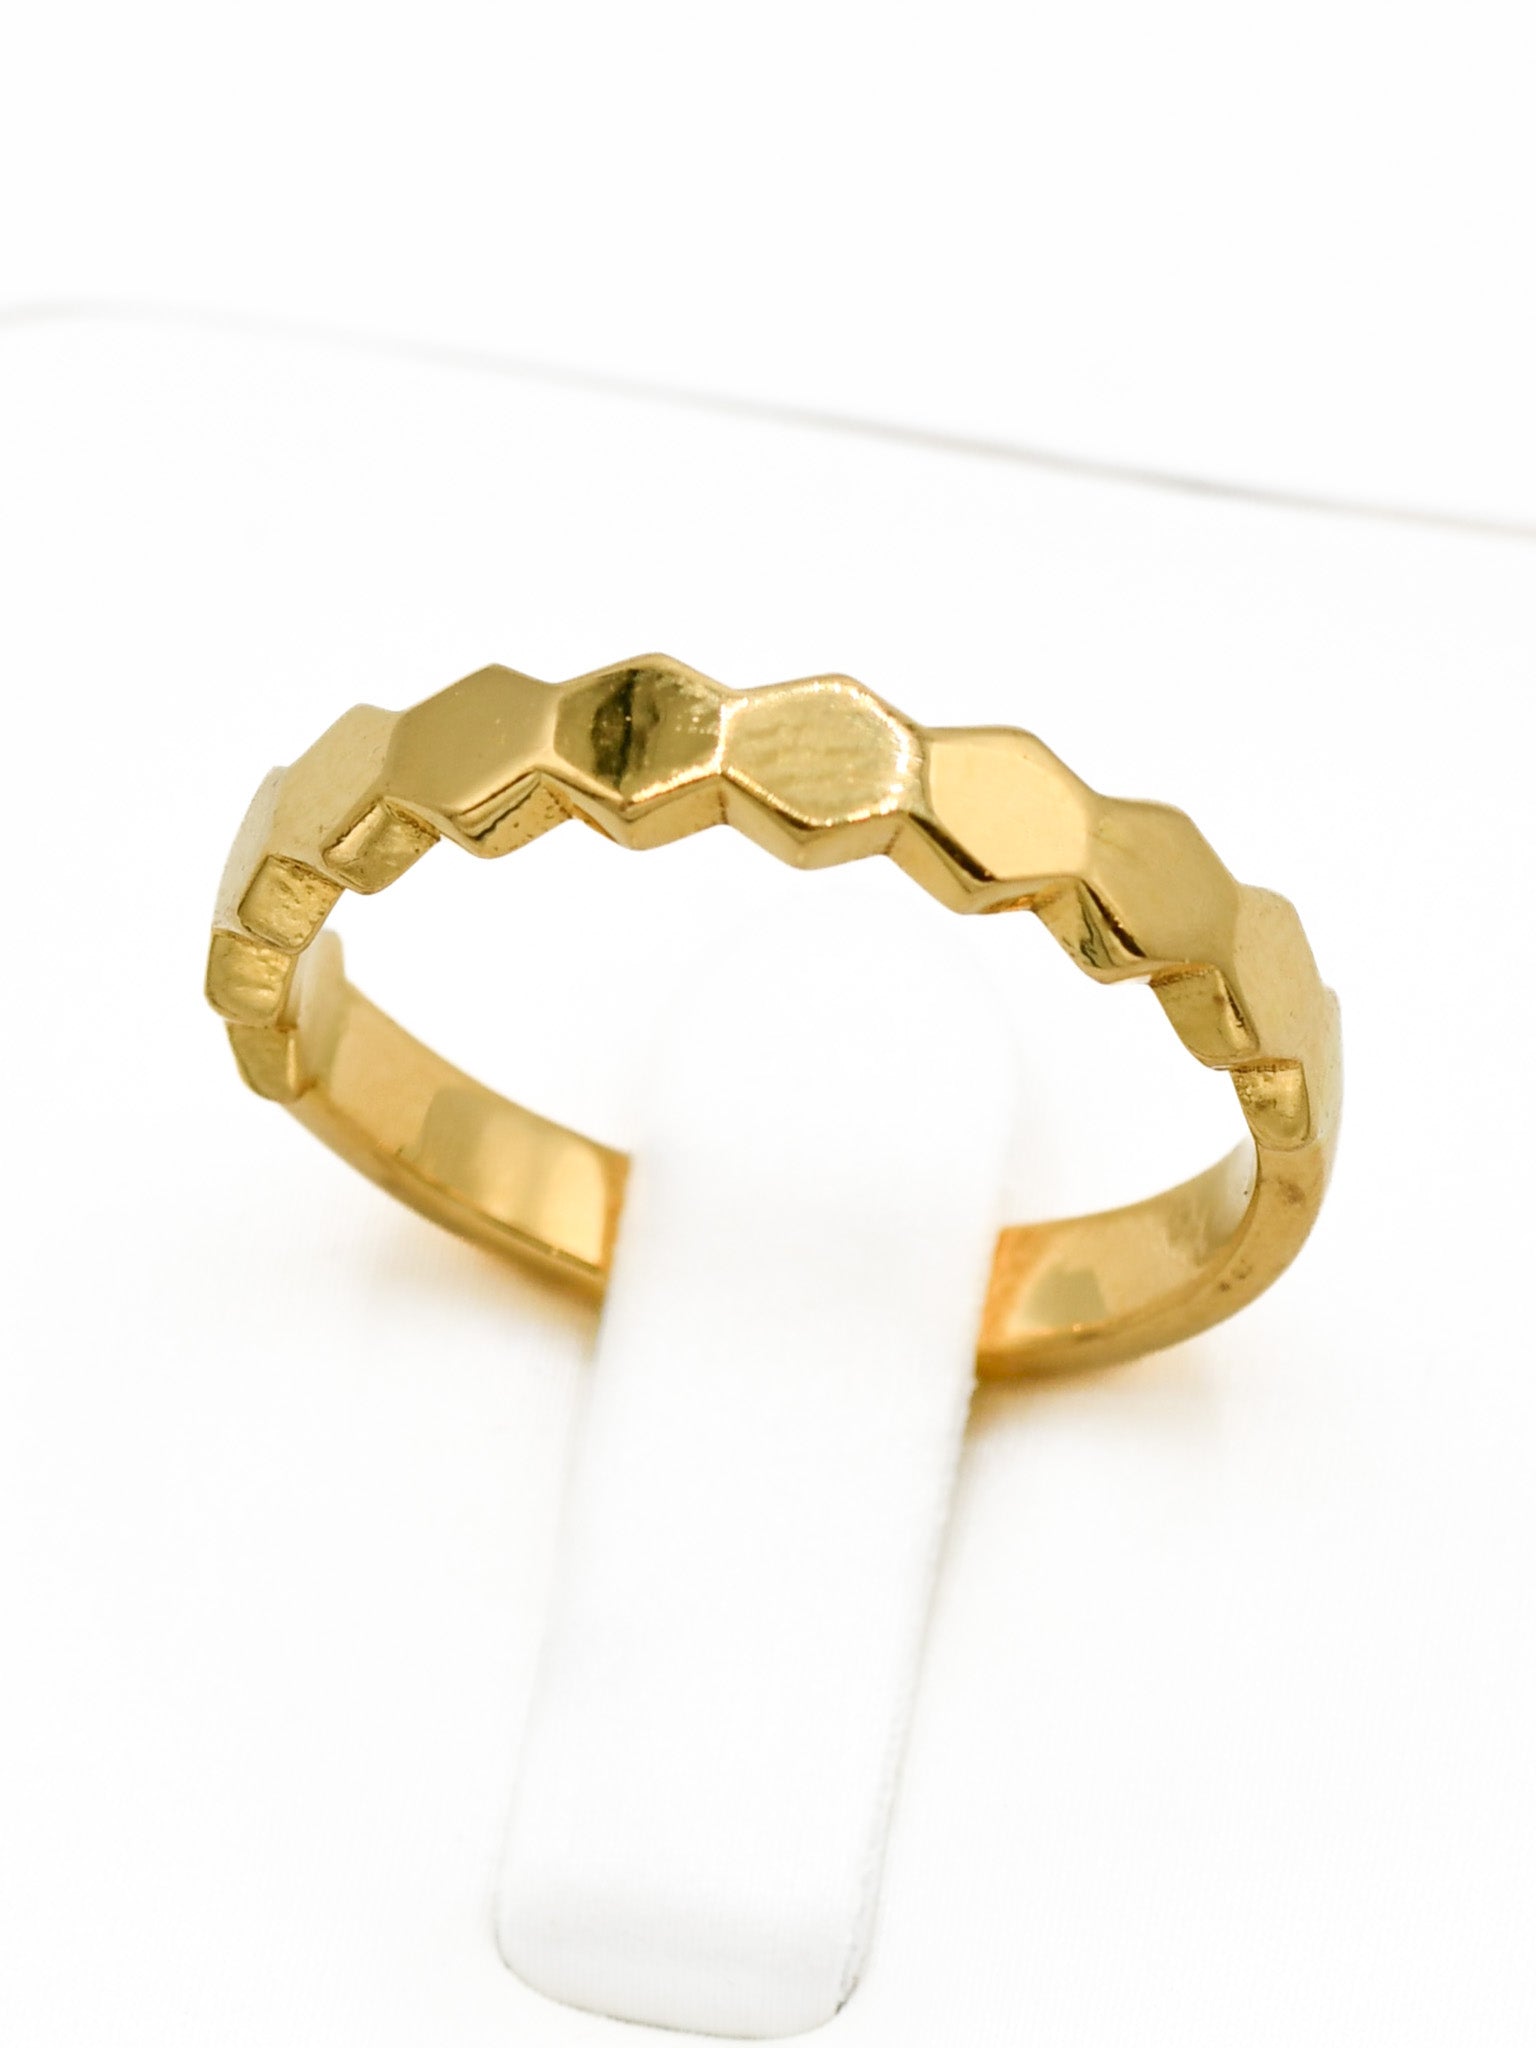 22ct Gold Band Ring - Roop Darshan